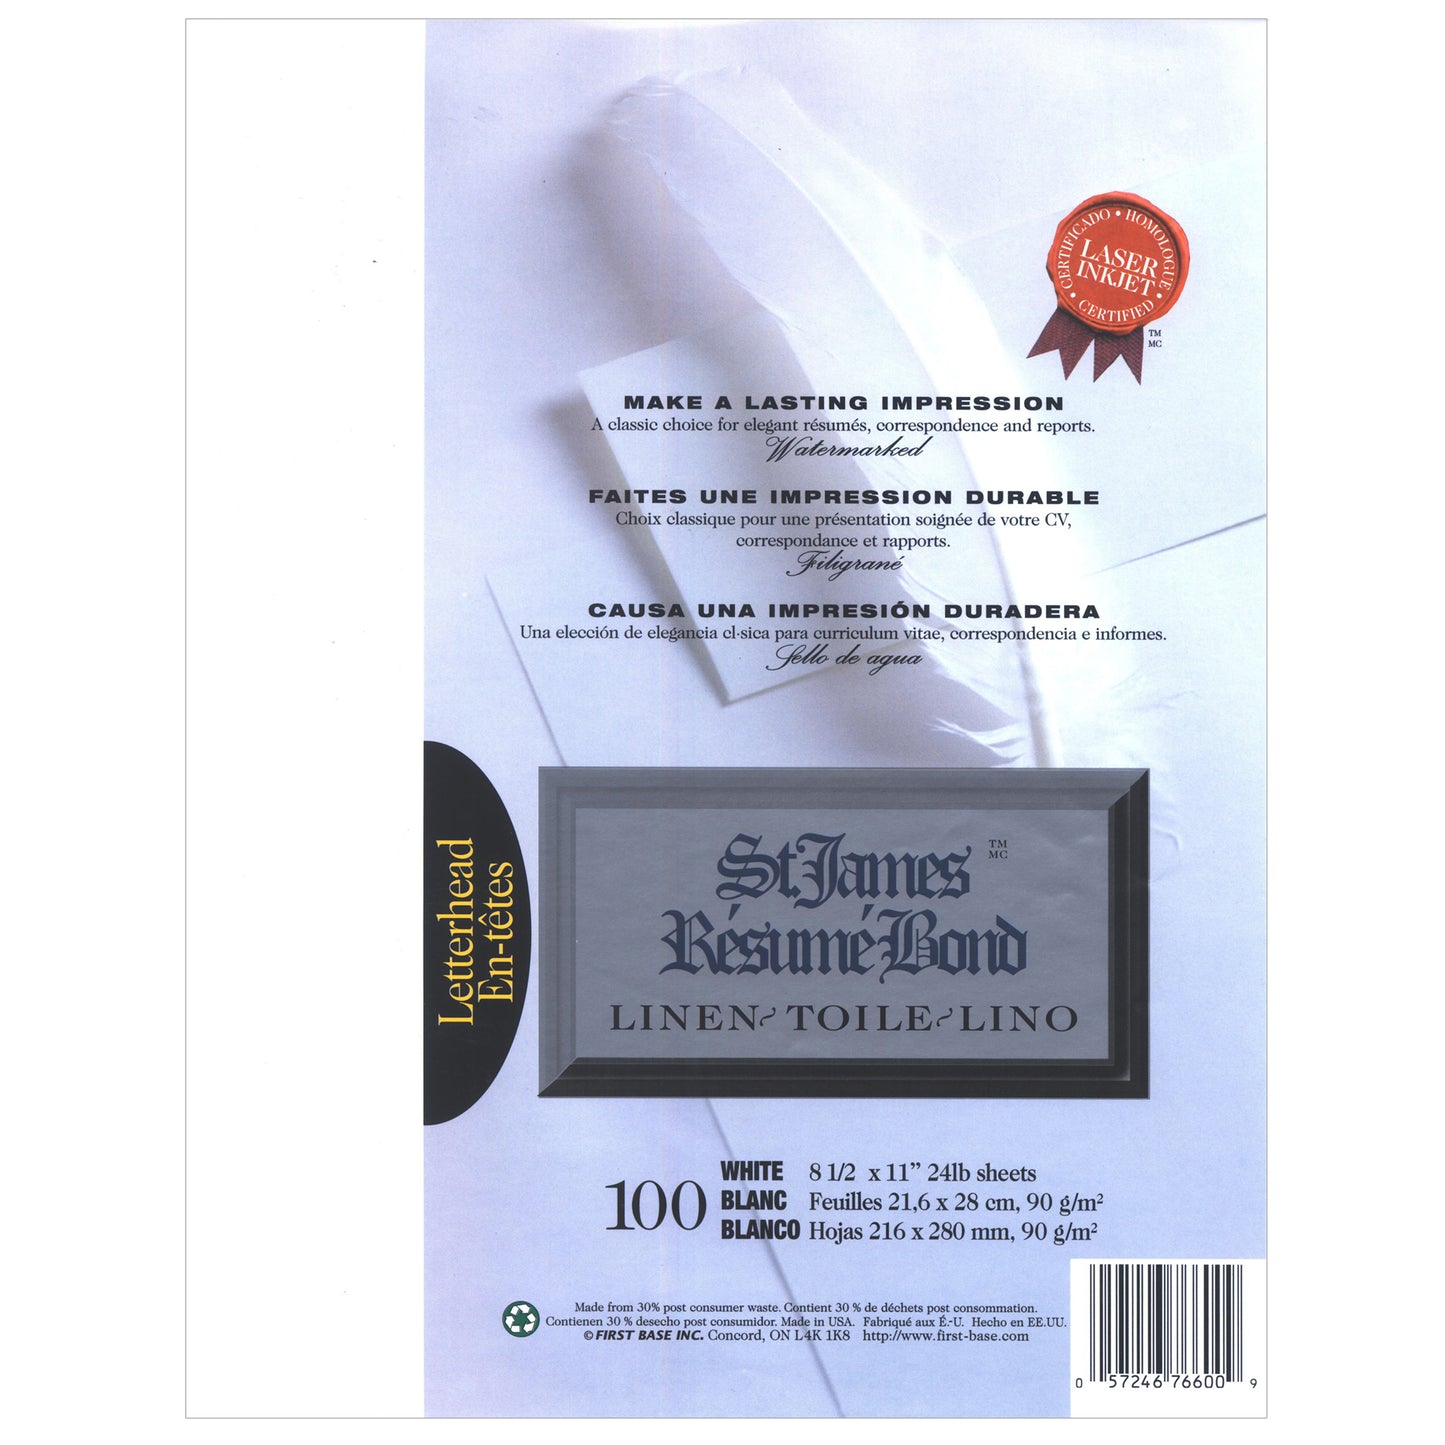 St. James® Rsum Bond, Linen, 24 lb Letter-Size Paper, White, Pack of 100